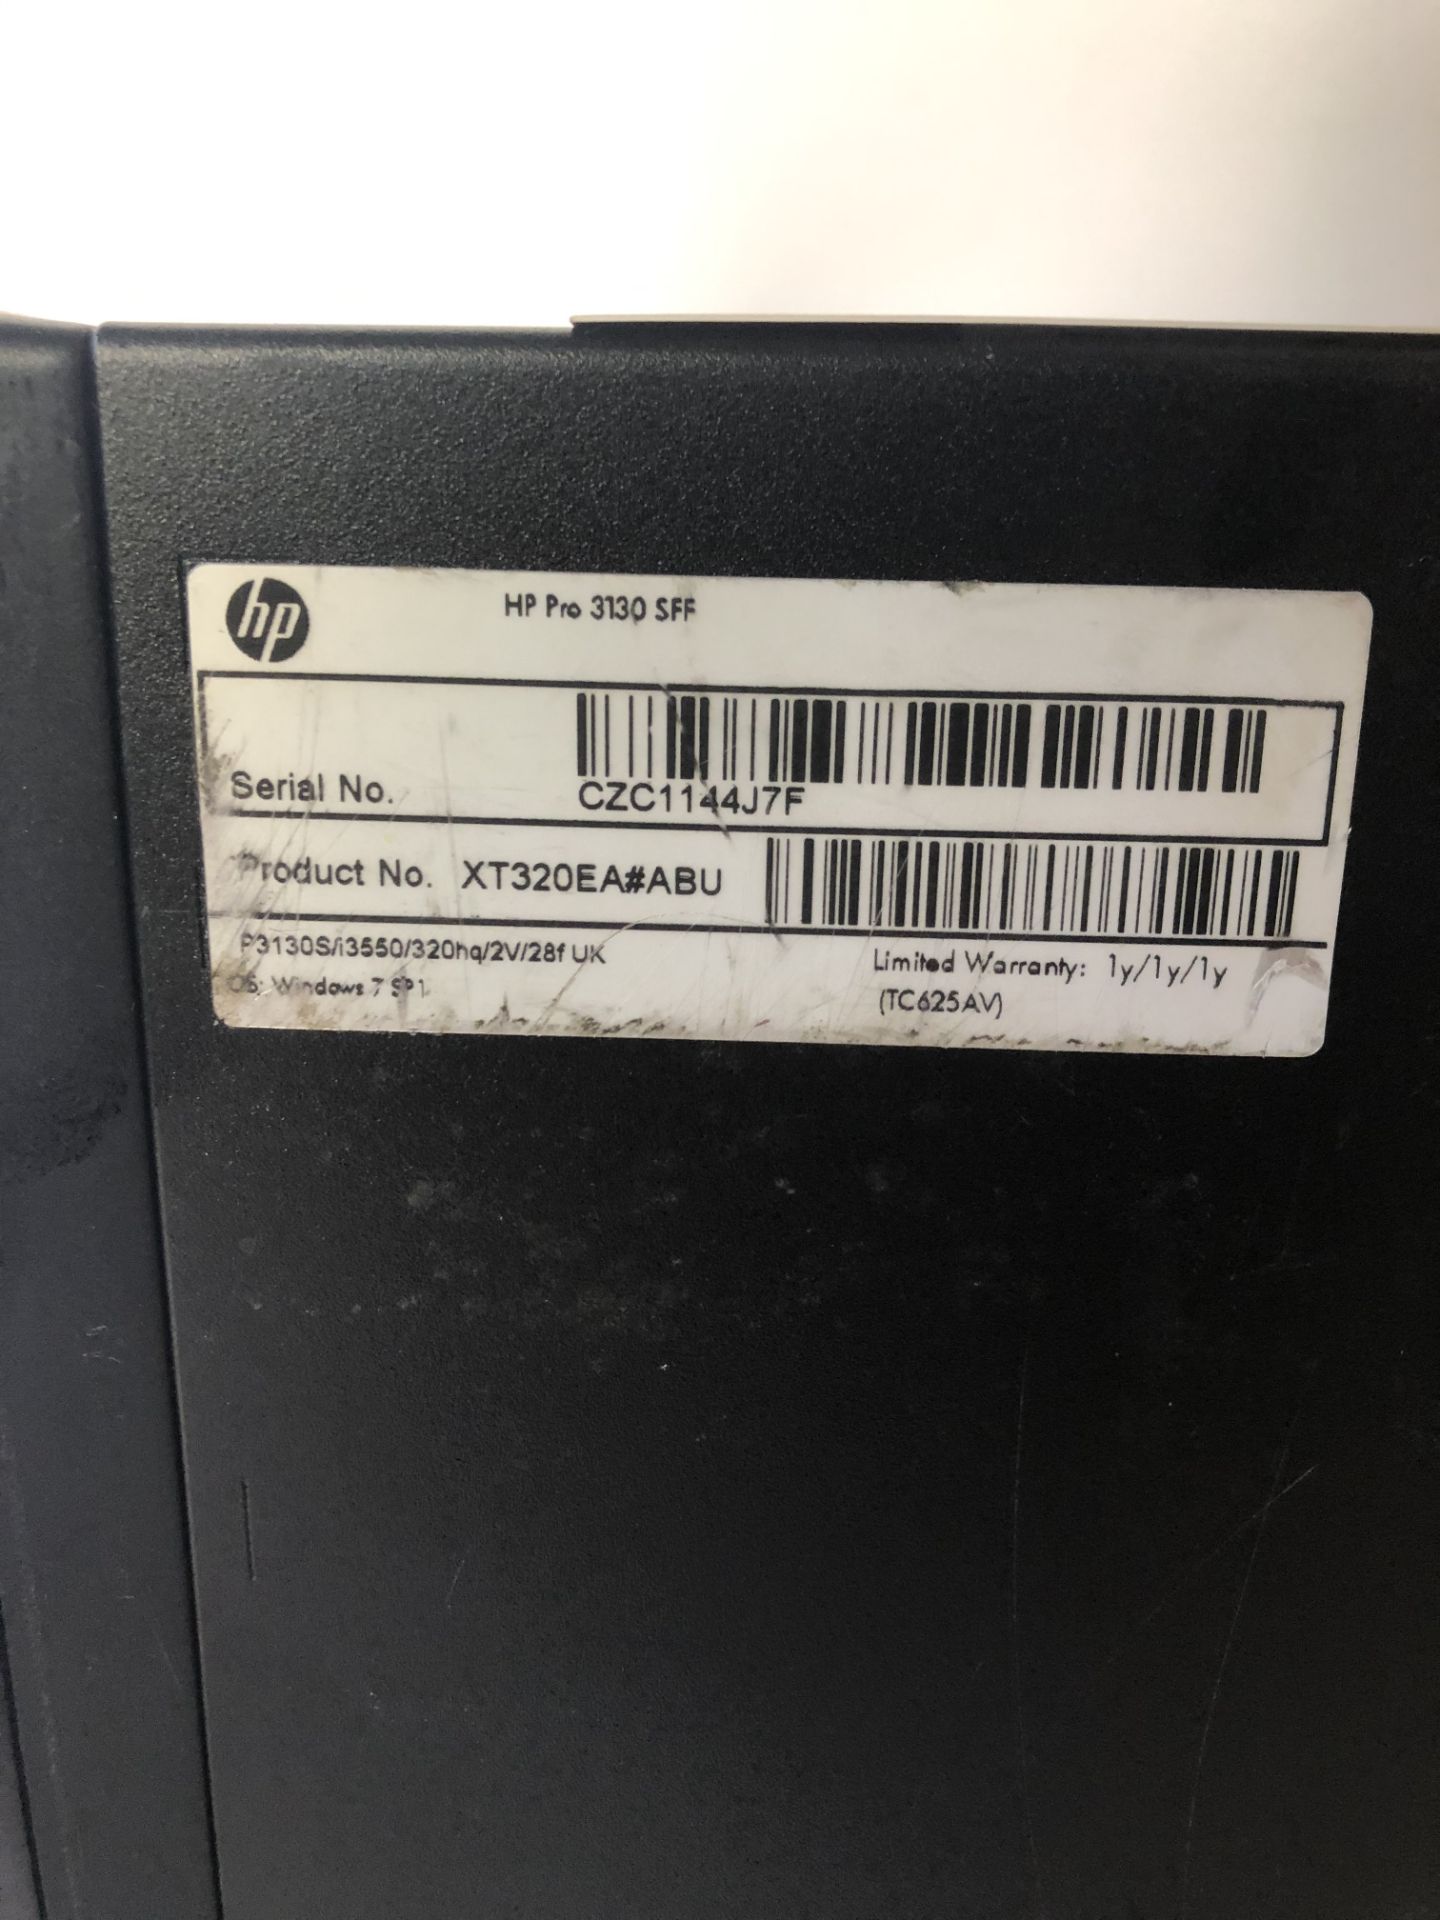 HP Pro 3130 SFF Desktop Computer - Image 2 of 2